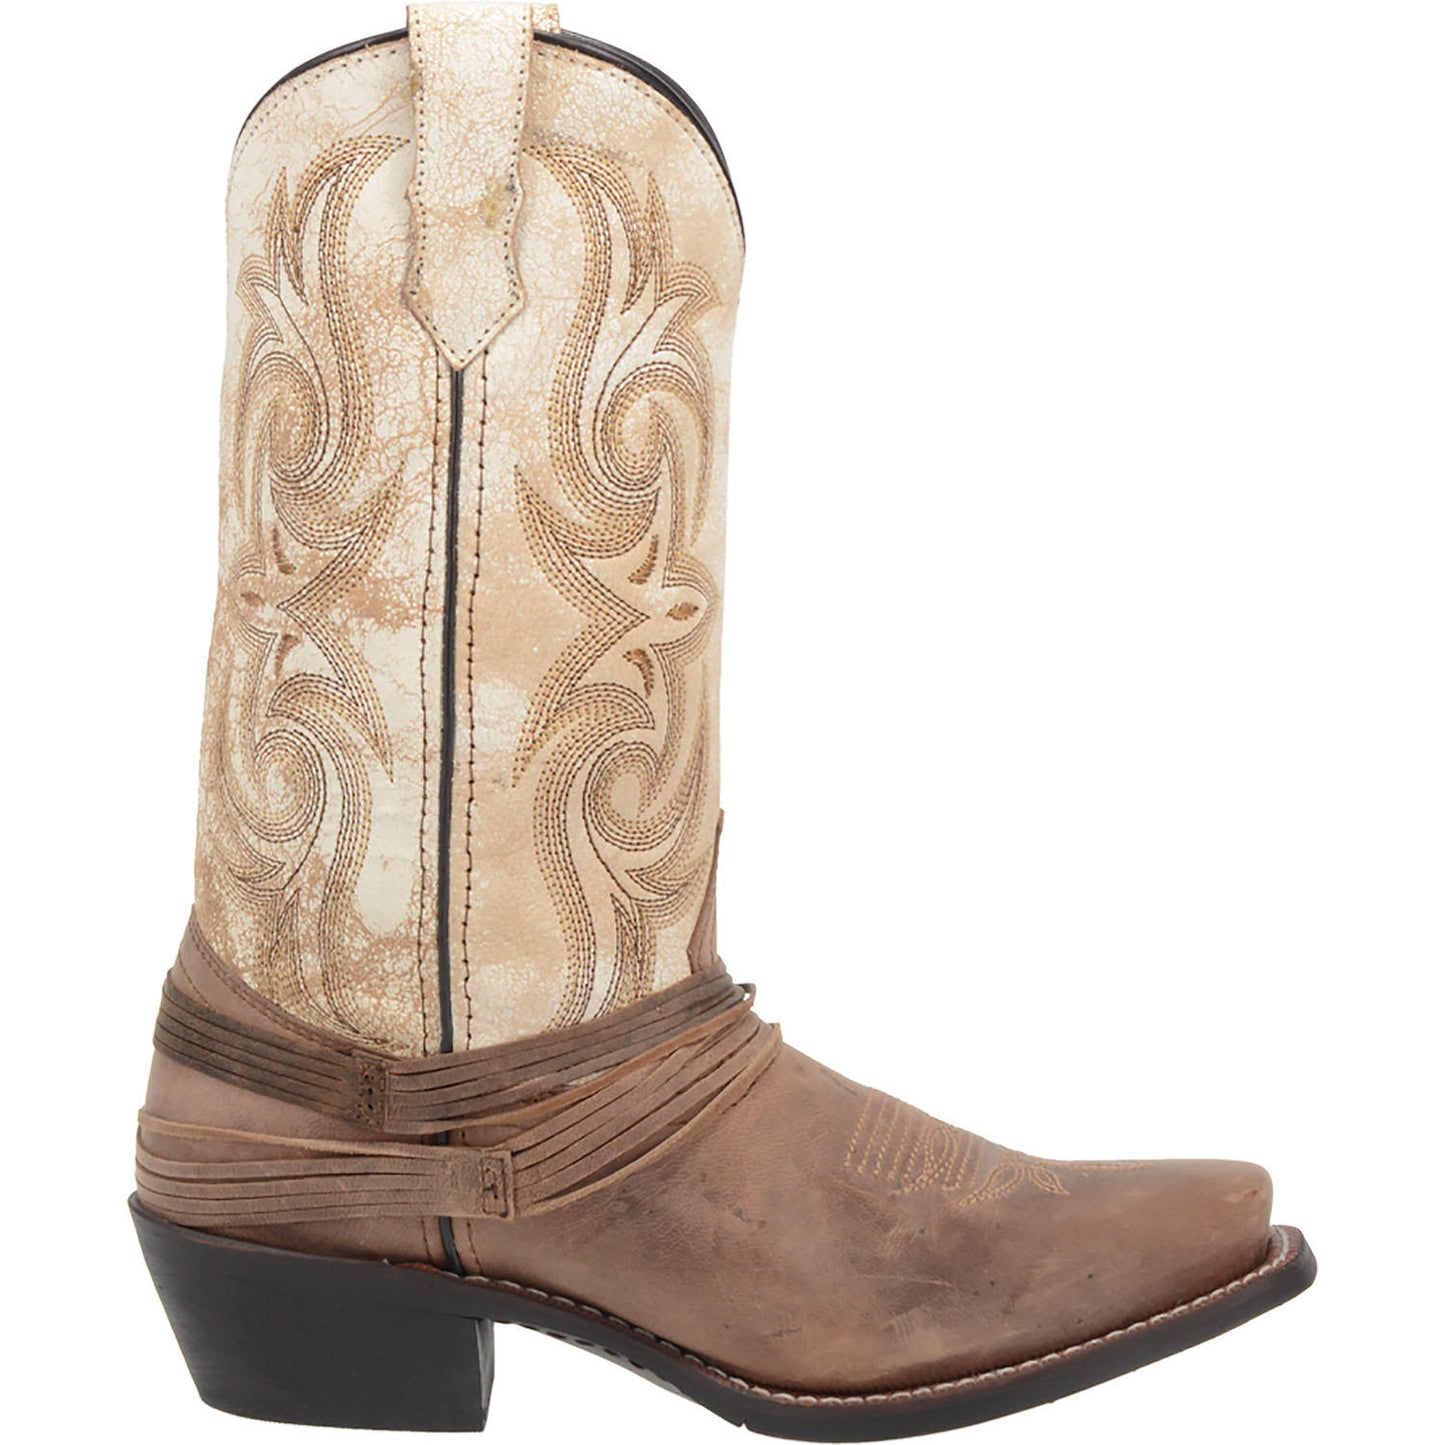 Laredo Myra Ladies Boots